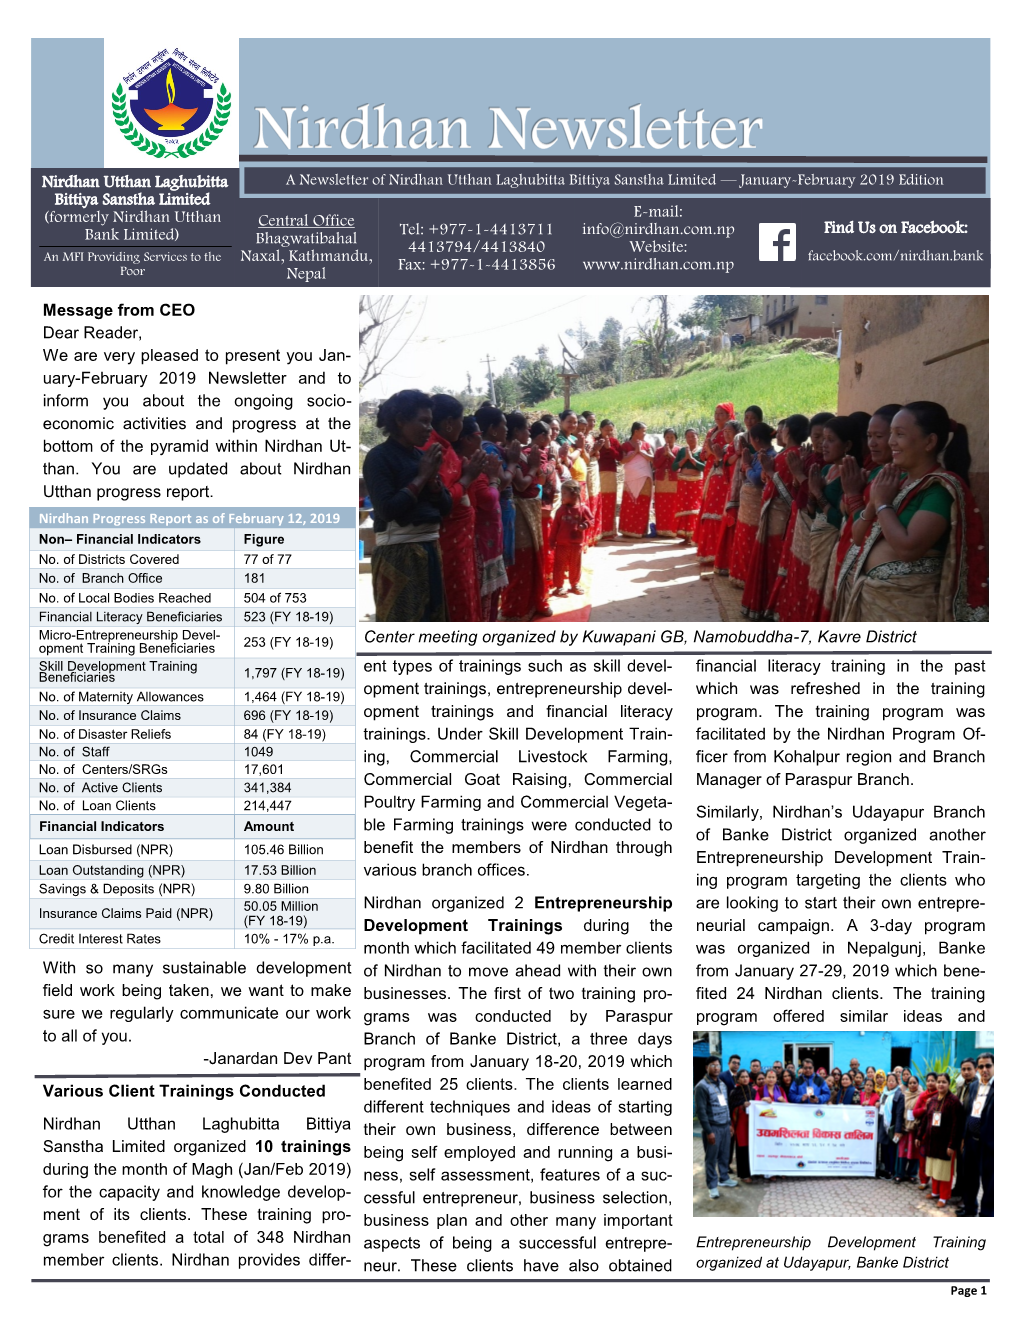 A Newsletter of Nirdhan Utthan Laghubitta Bittiya Sanstha Limited